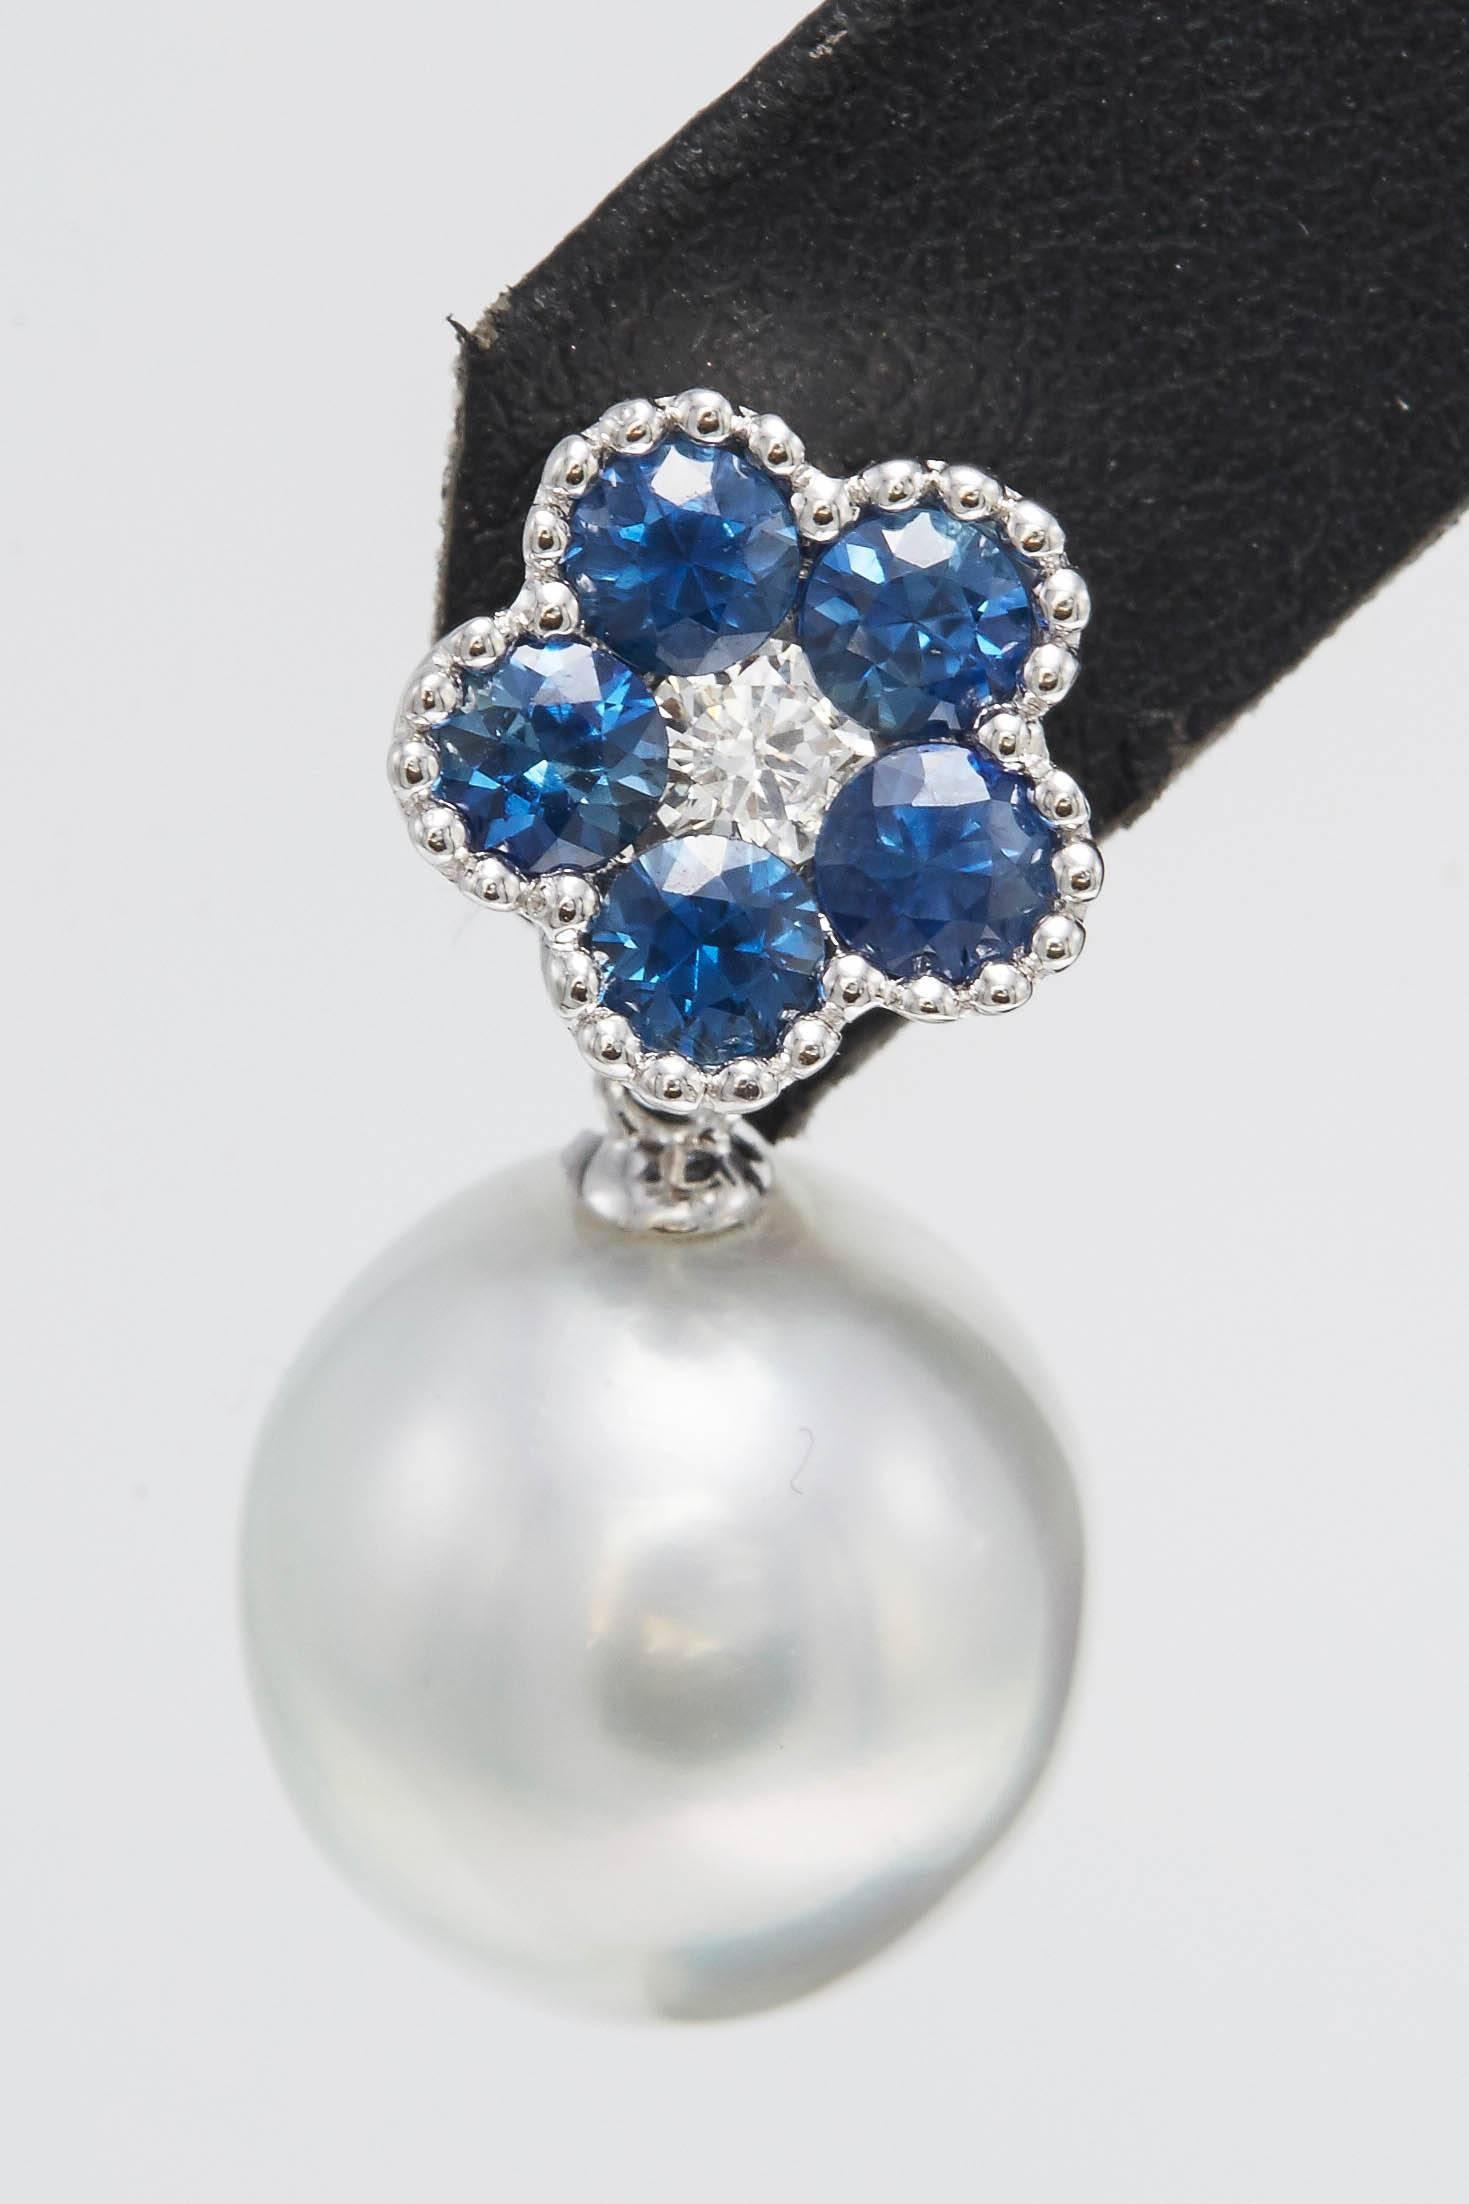 18K White Gold
South Sea Pearl 12-13 mm
Sapphire : 1.70 Carats
Diamonds: 0.26 Carats